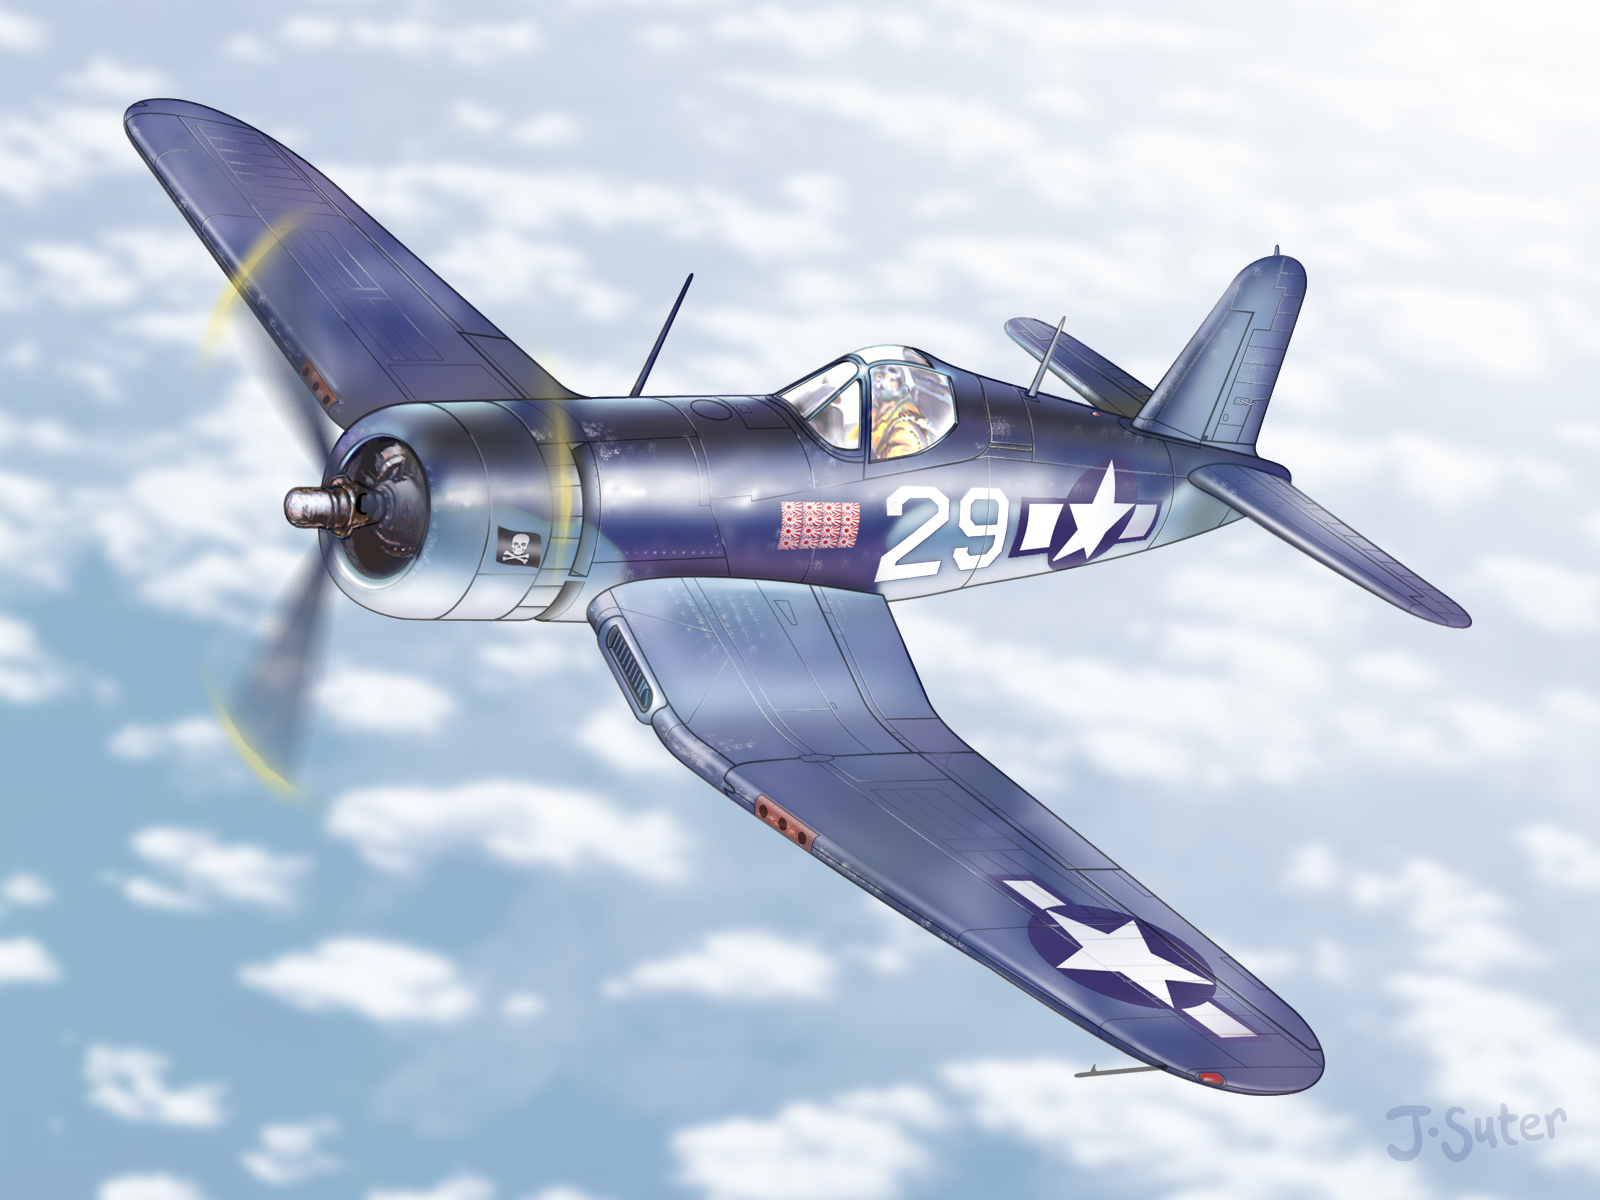 Vought F4U Corsair Plane Model  Free photo on Pixabay  Pixabay